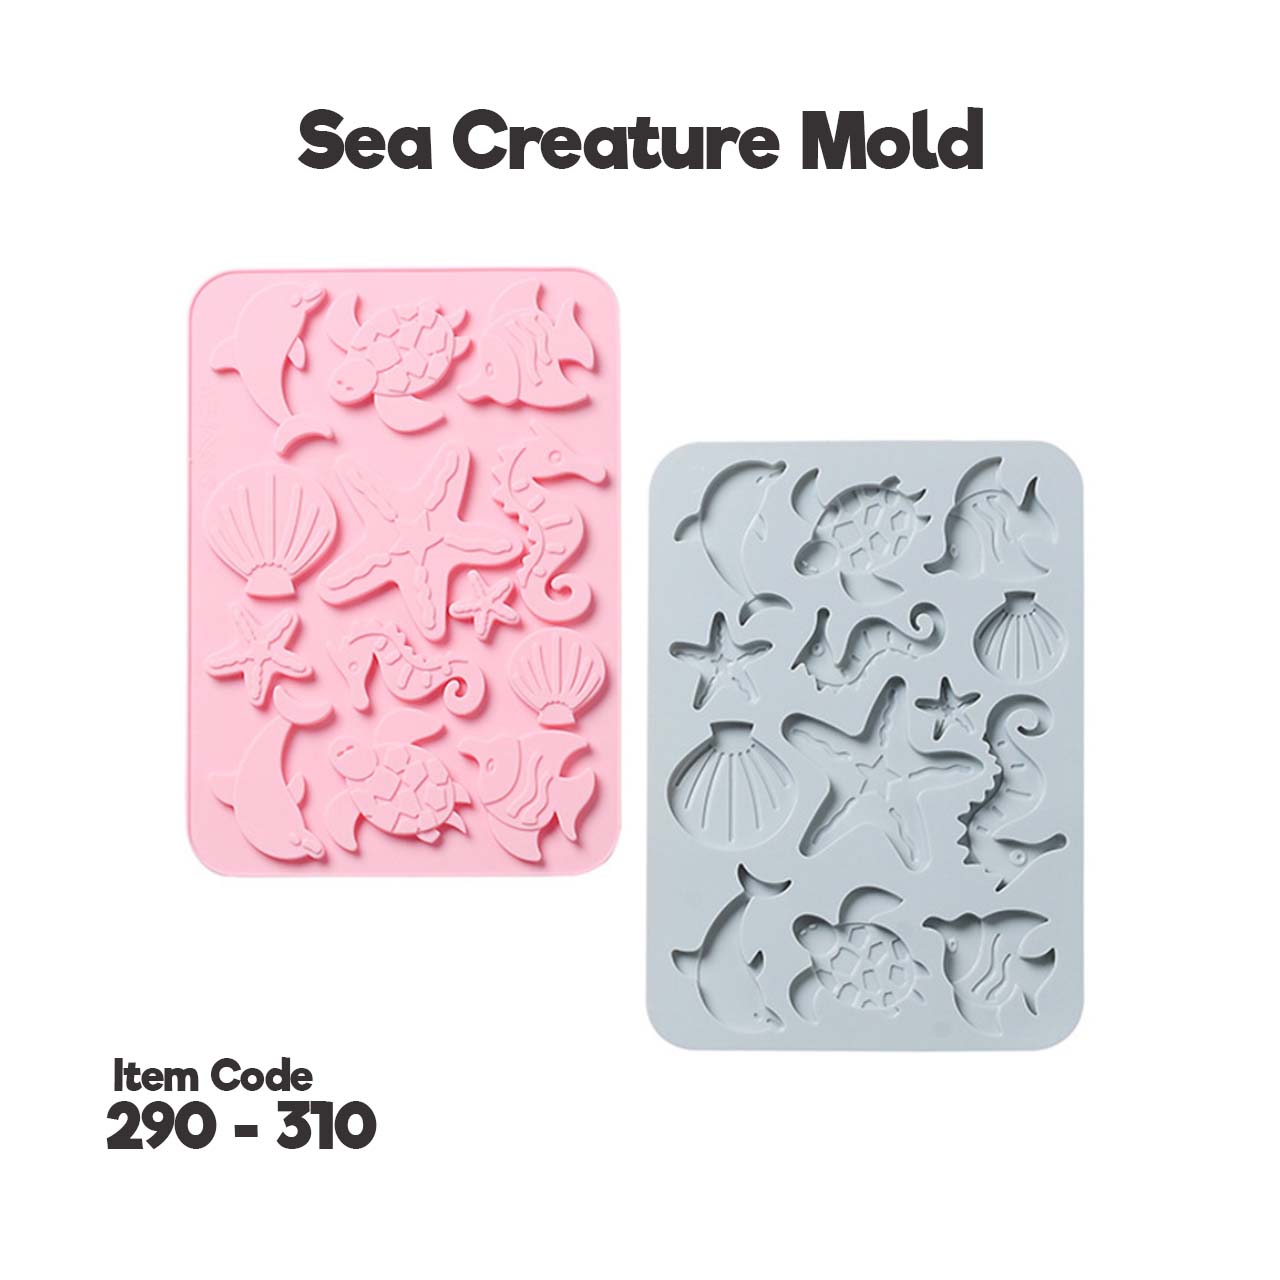 Sea Creature Mold